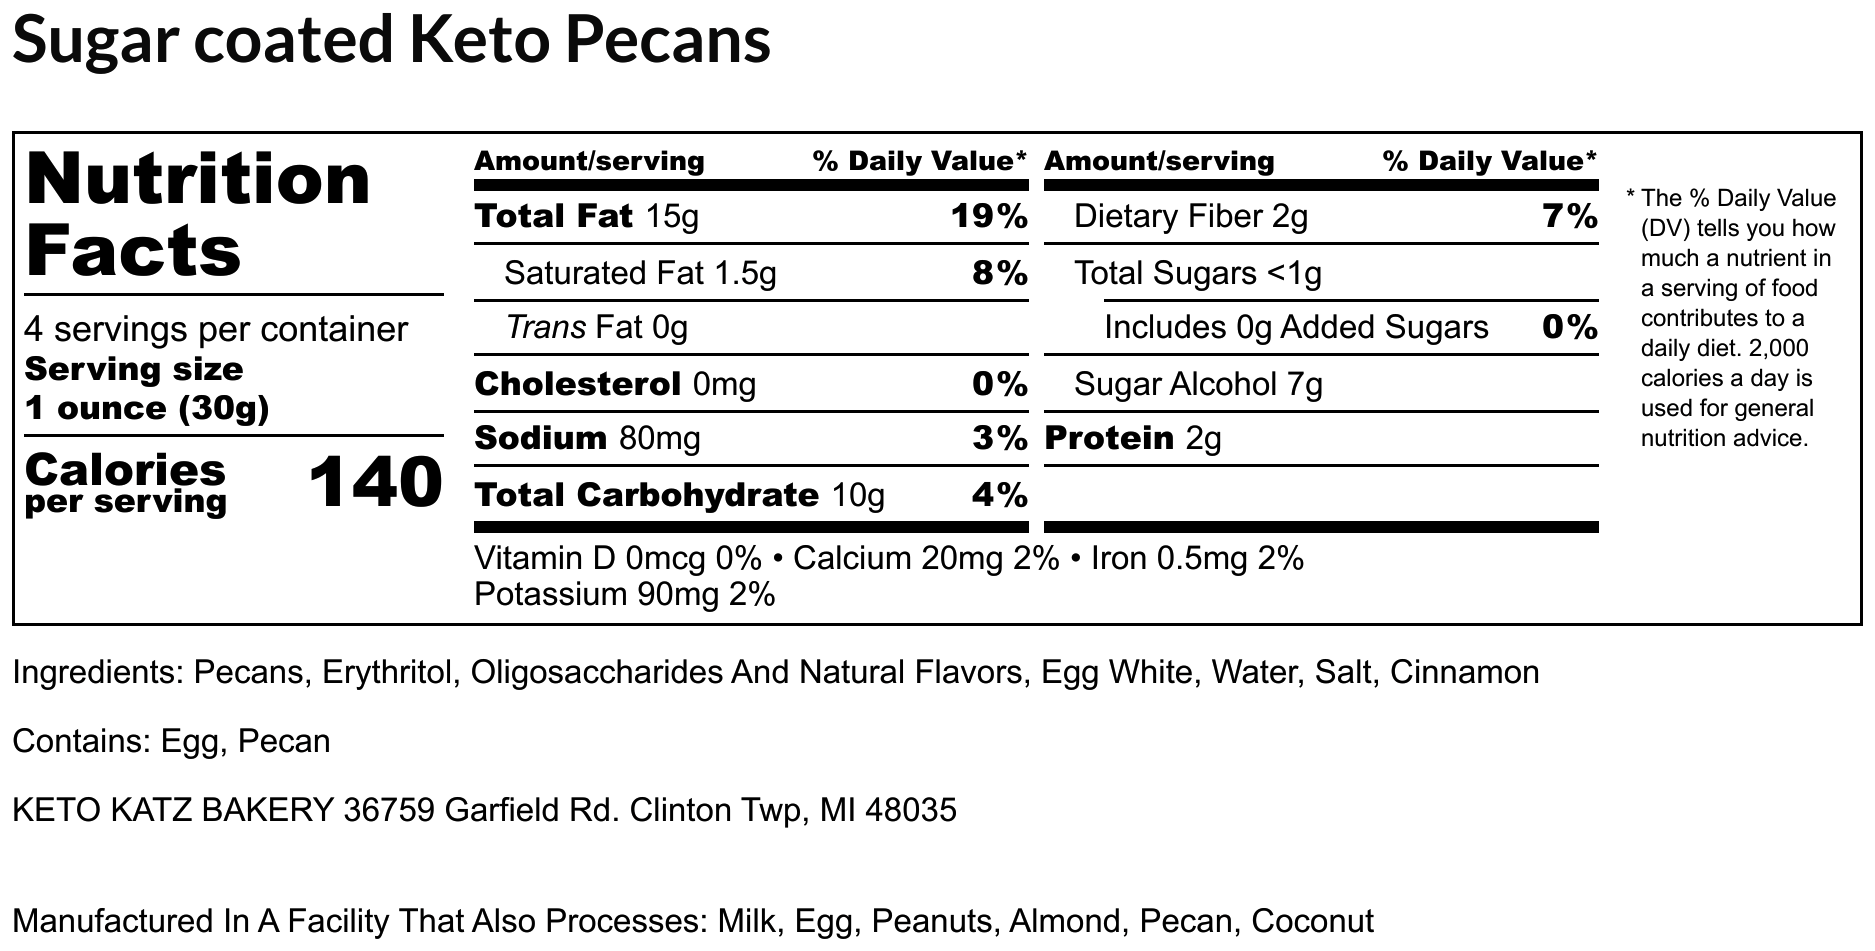 Sugar coated Keto Pecans - Nutrition Label.png